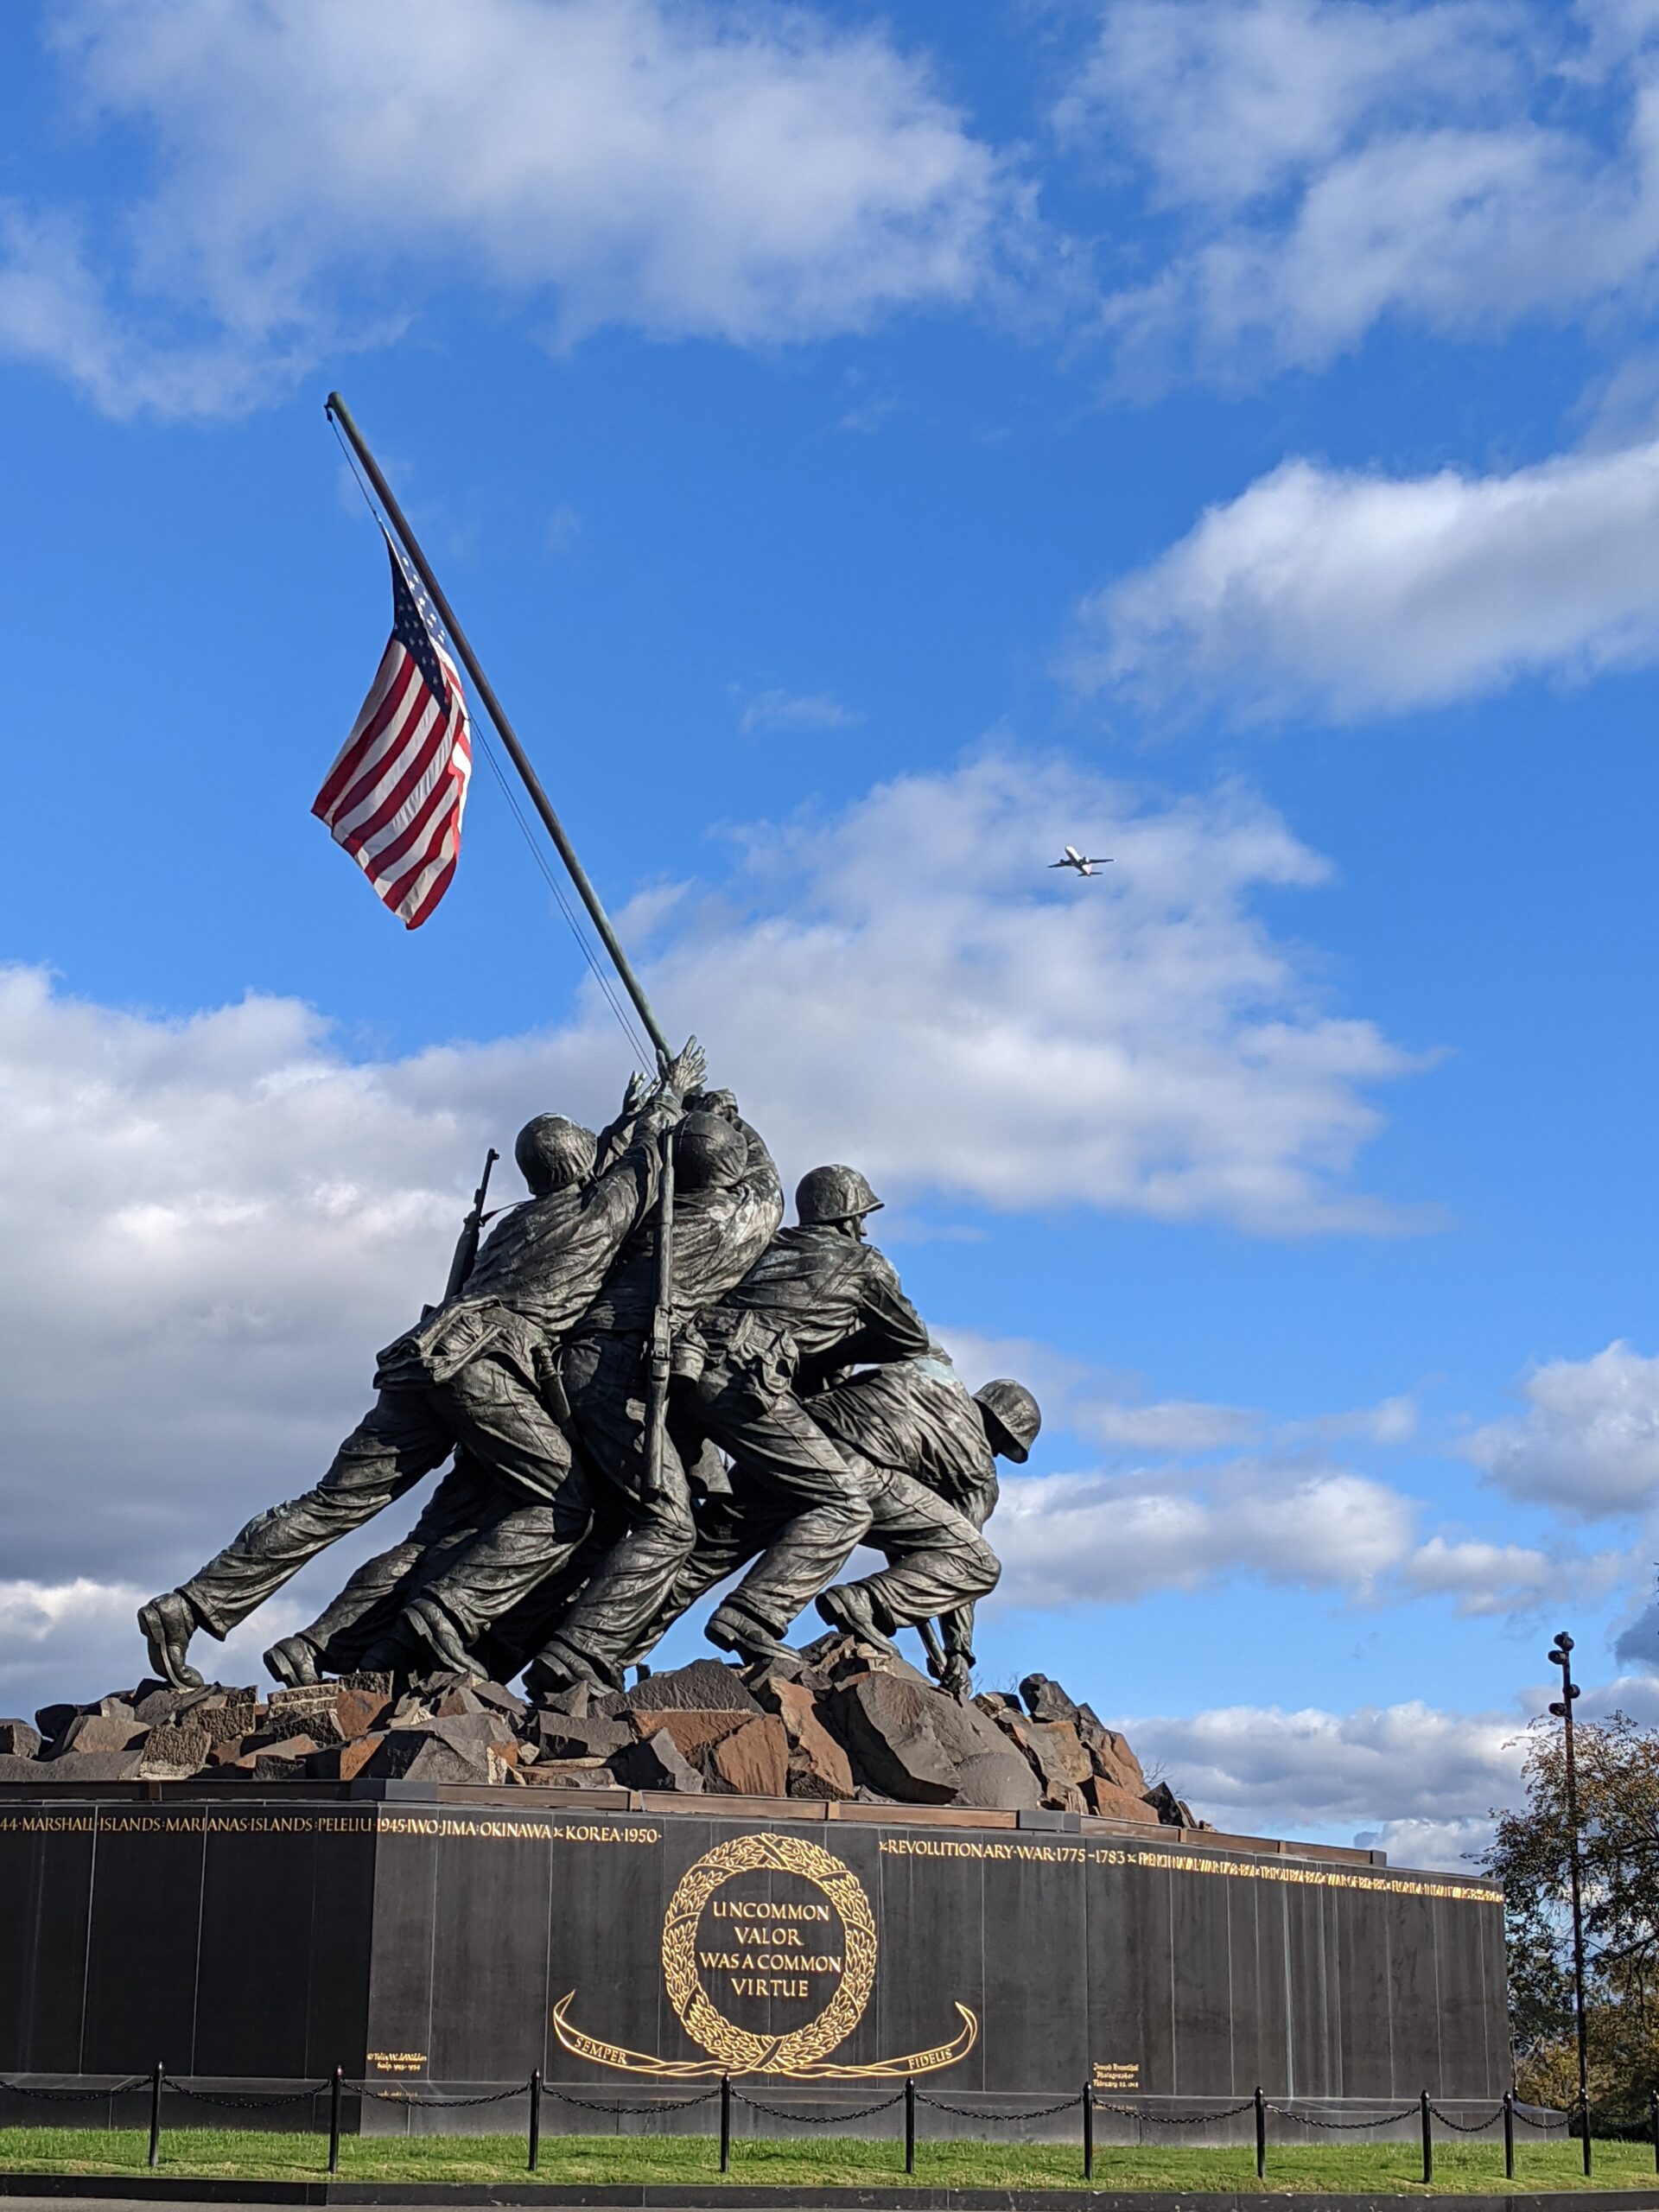 a giant sculpture of marines raising a flag (iwo jima photo)